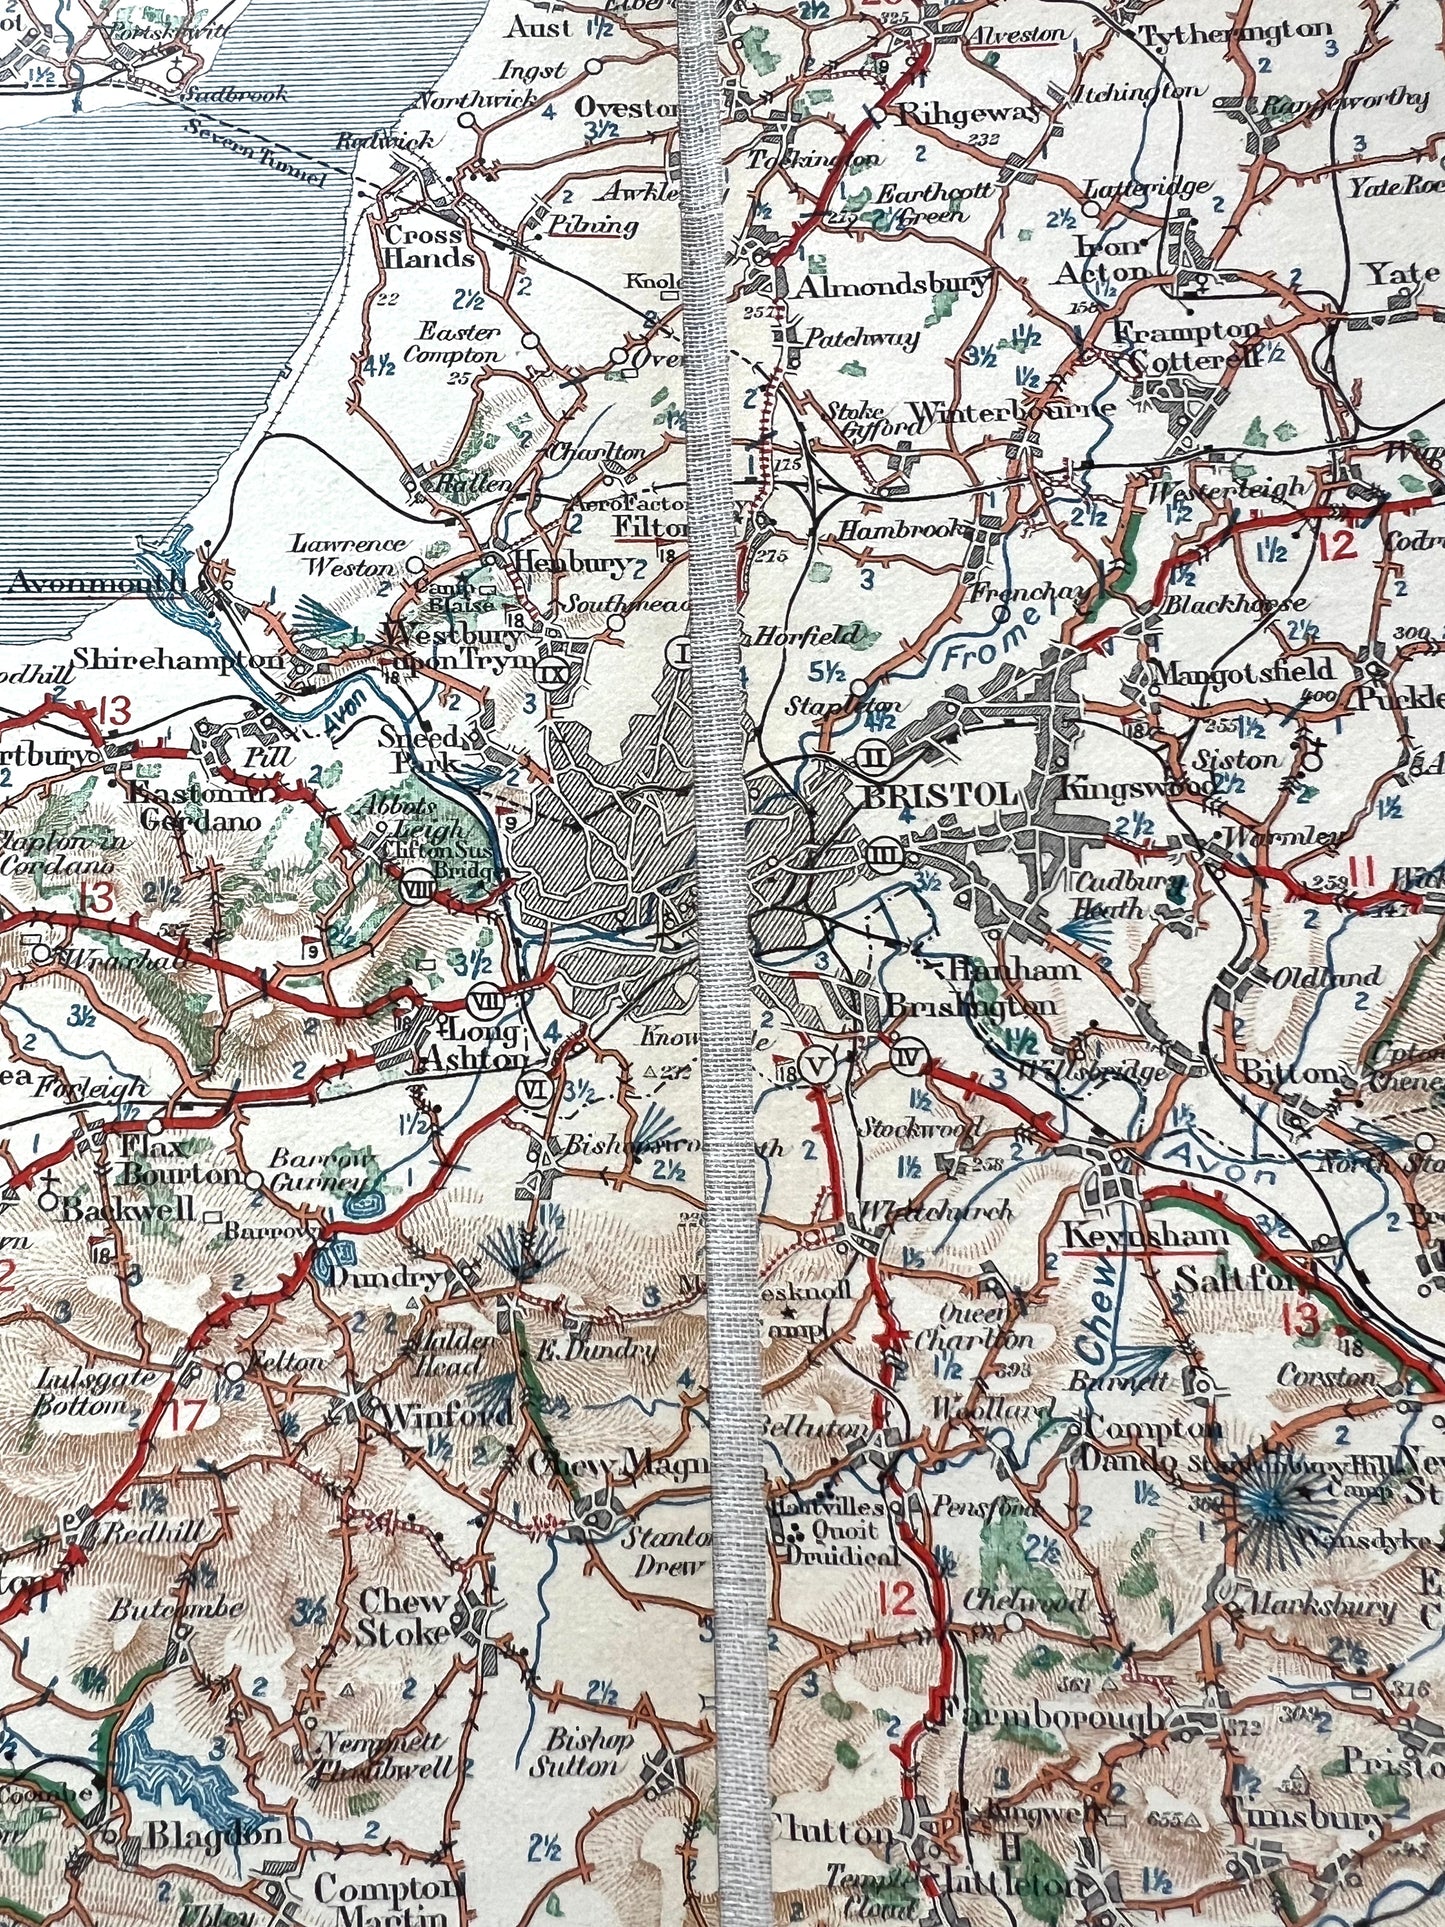 BRISTOL - CARMARTHEN 1920s Michelin Map  (Sheet 17) incl CARDIFF SWANSEA MONMOUTH